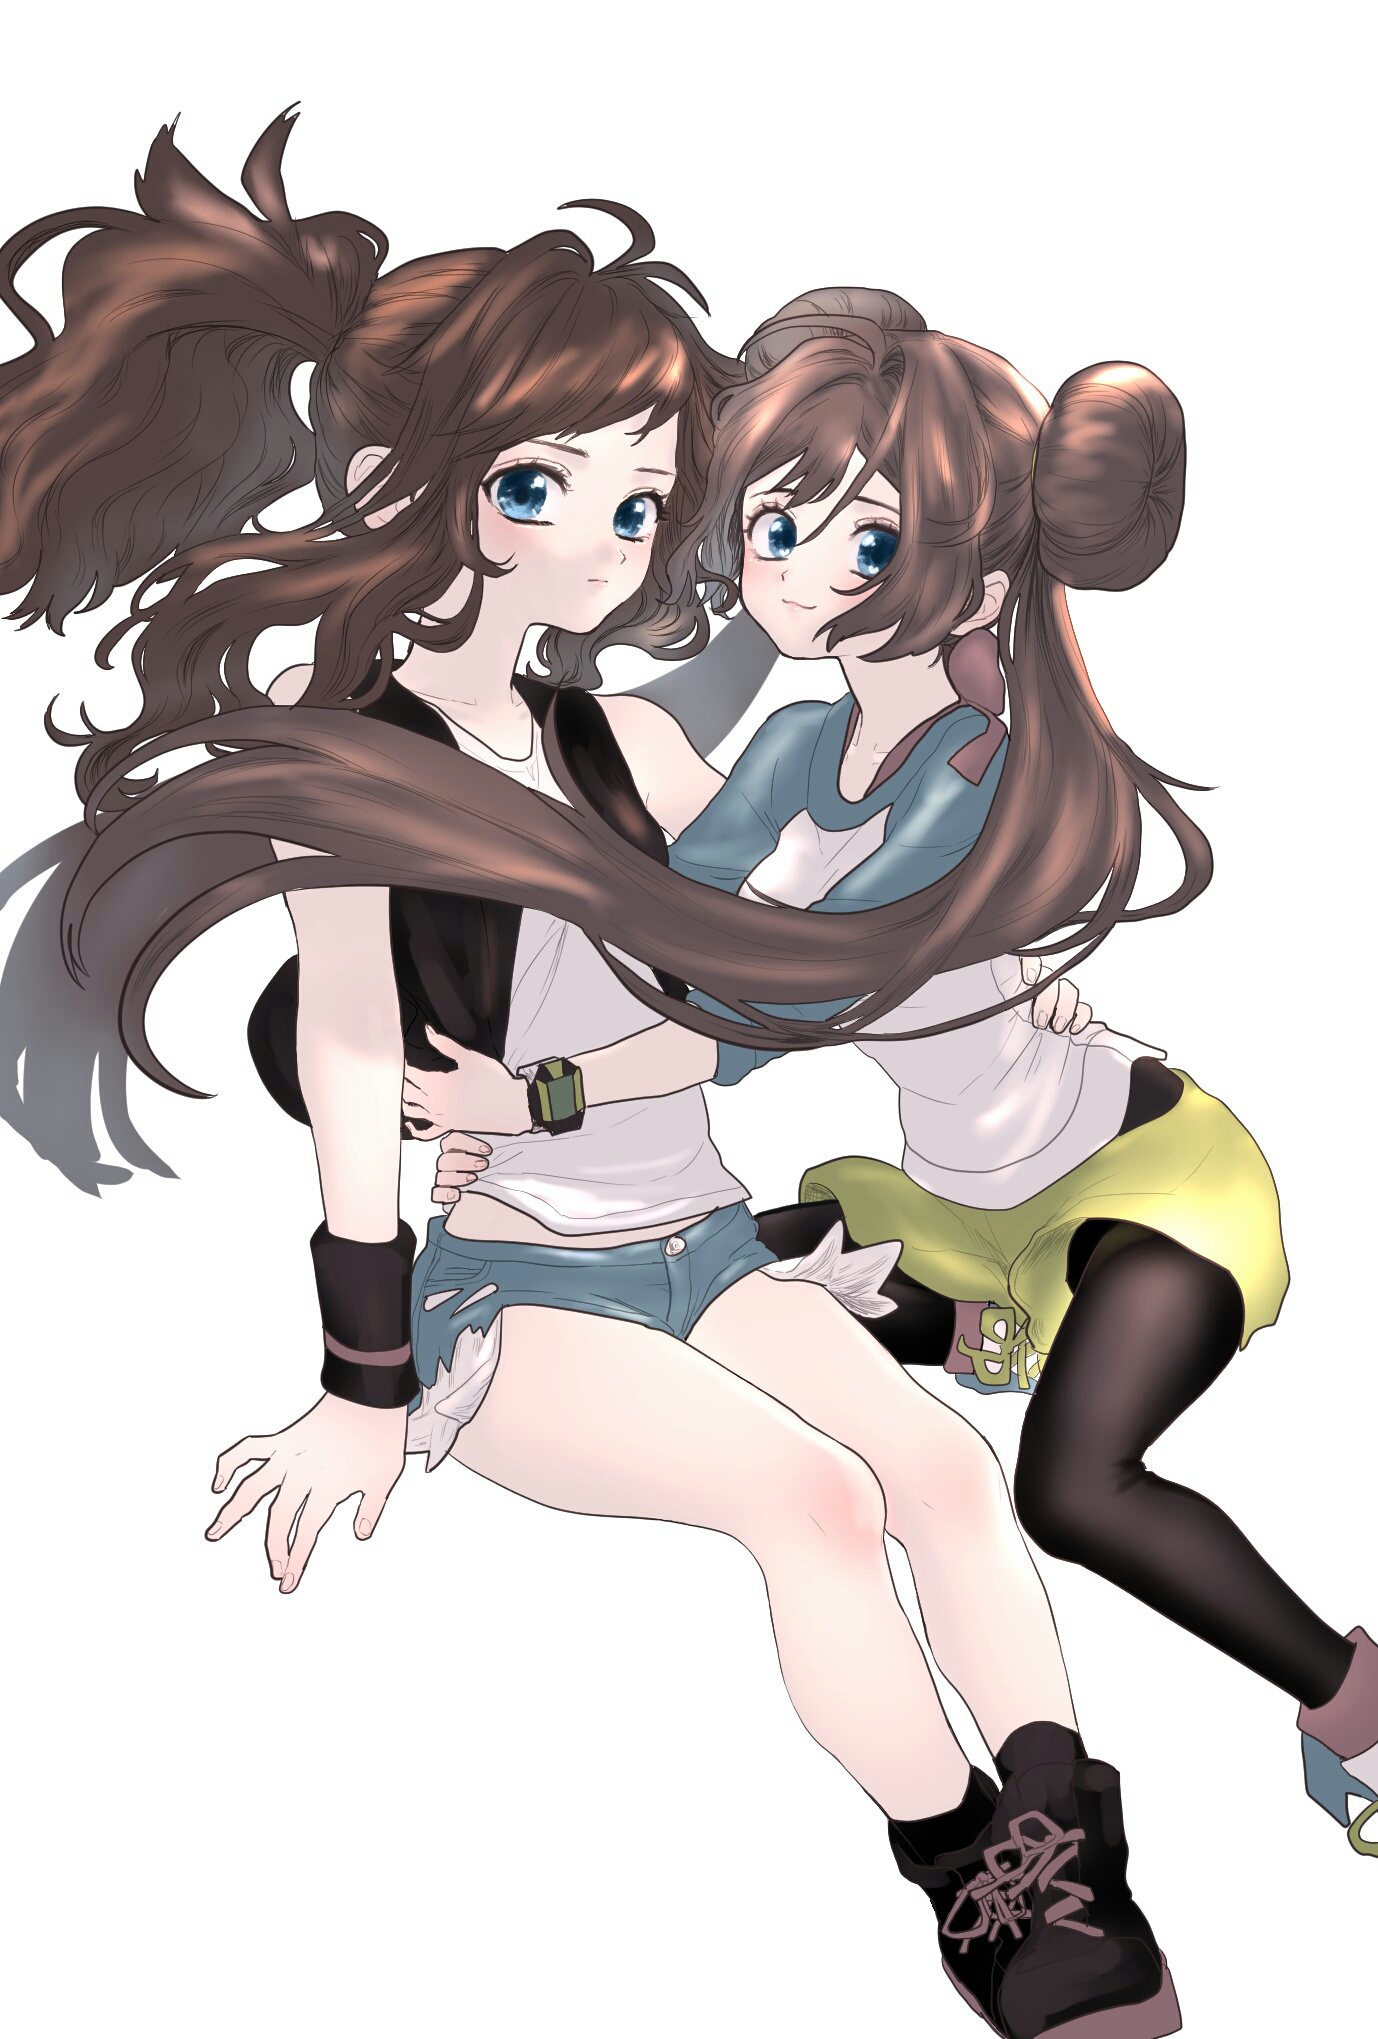 Anime 1378x2039 anime anime girls Pokémon Rosa (Pokémon) Hilda (Pokémon) long hair twintails ponytail brunette two women artwork digital art fan art